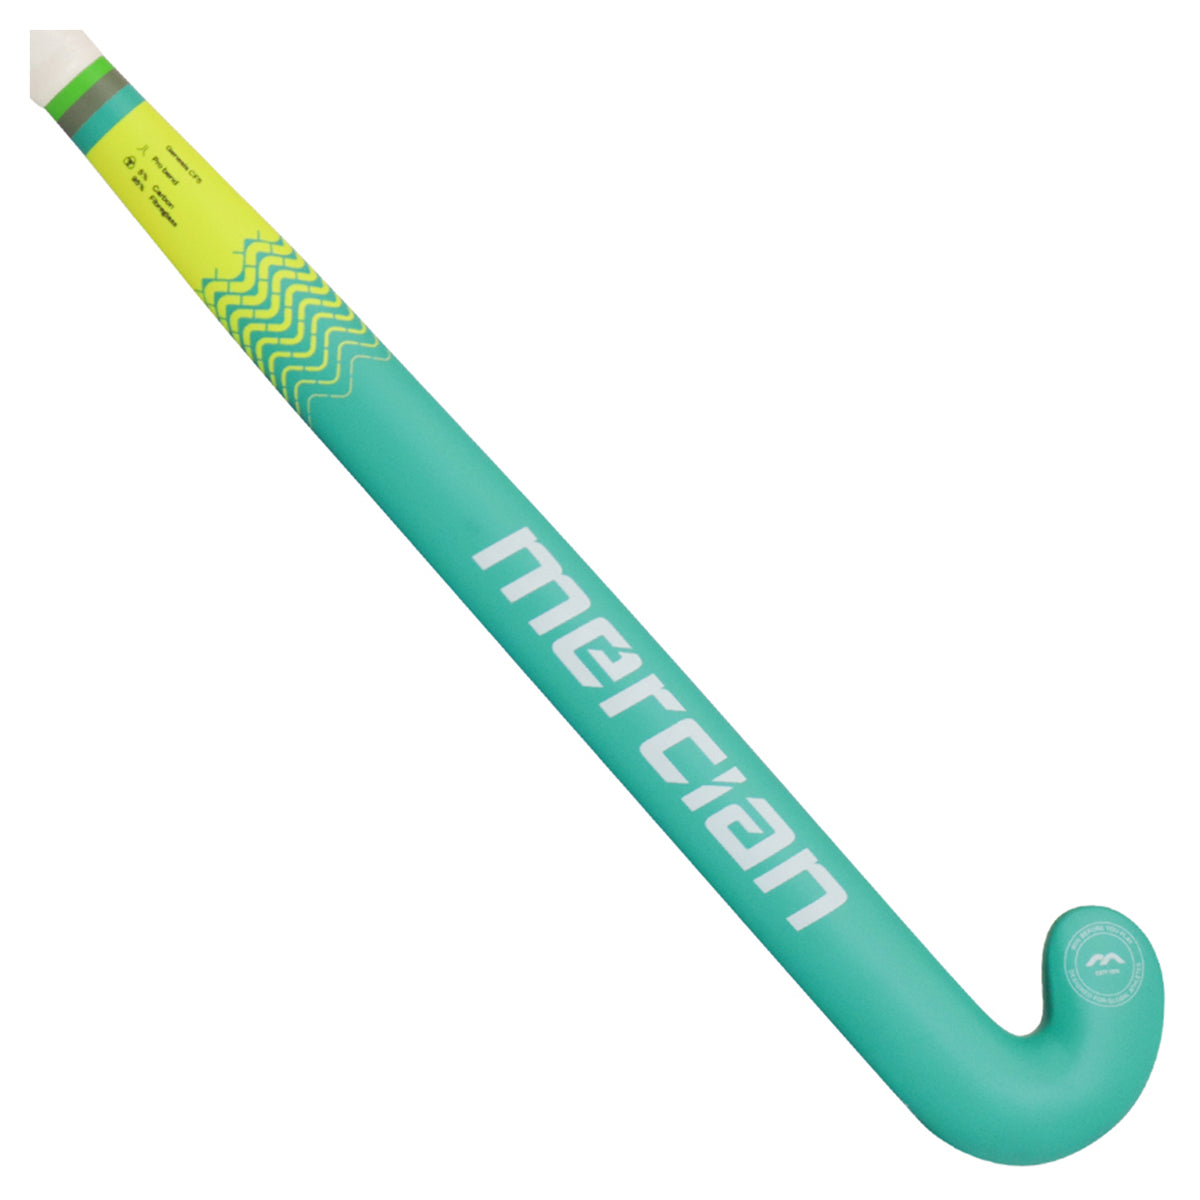 Mercian Genesis CF5 Hockey Stick: Black/Green/Yellow